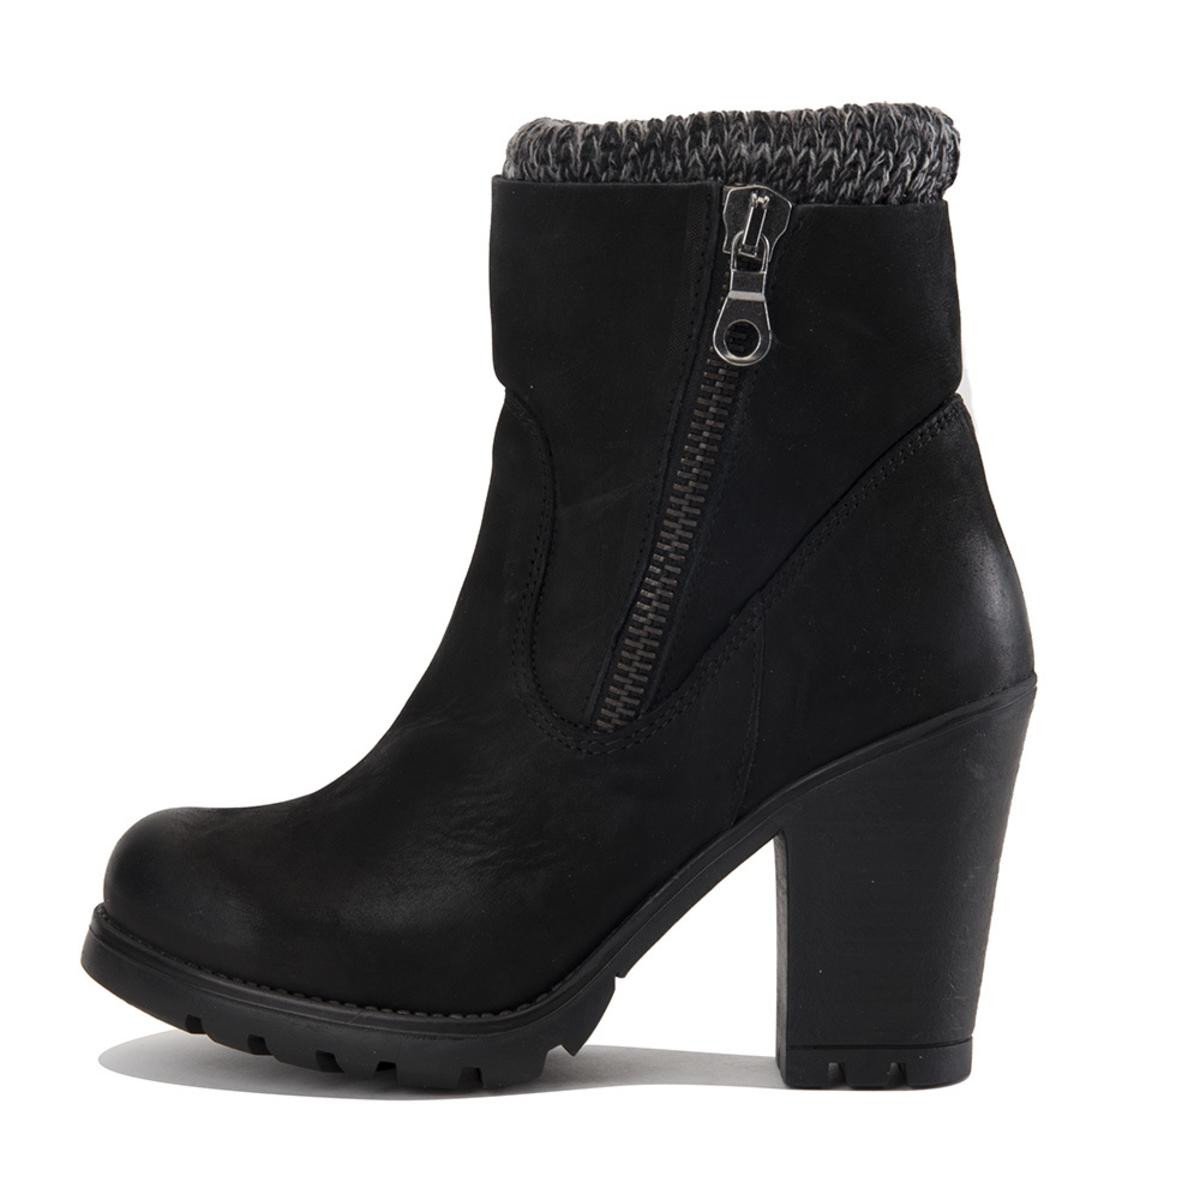 Steve Madden for Women: Sweaterr Black Leather Heel Boots